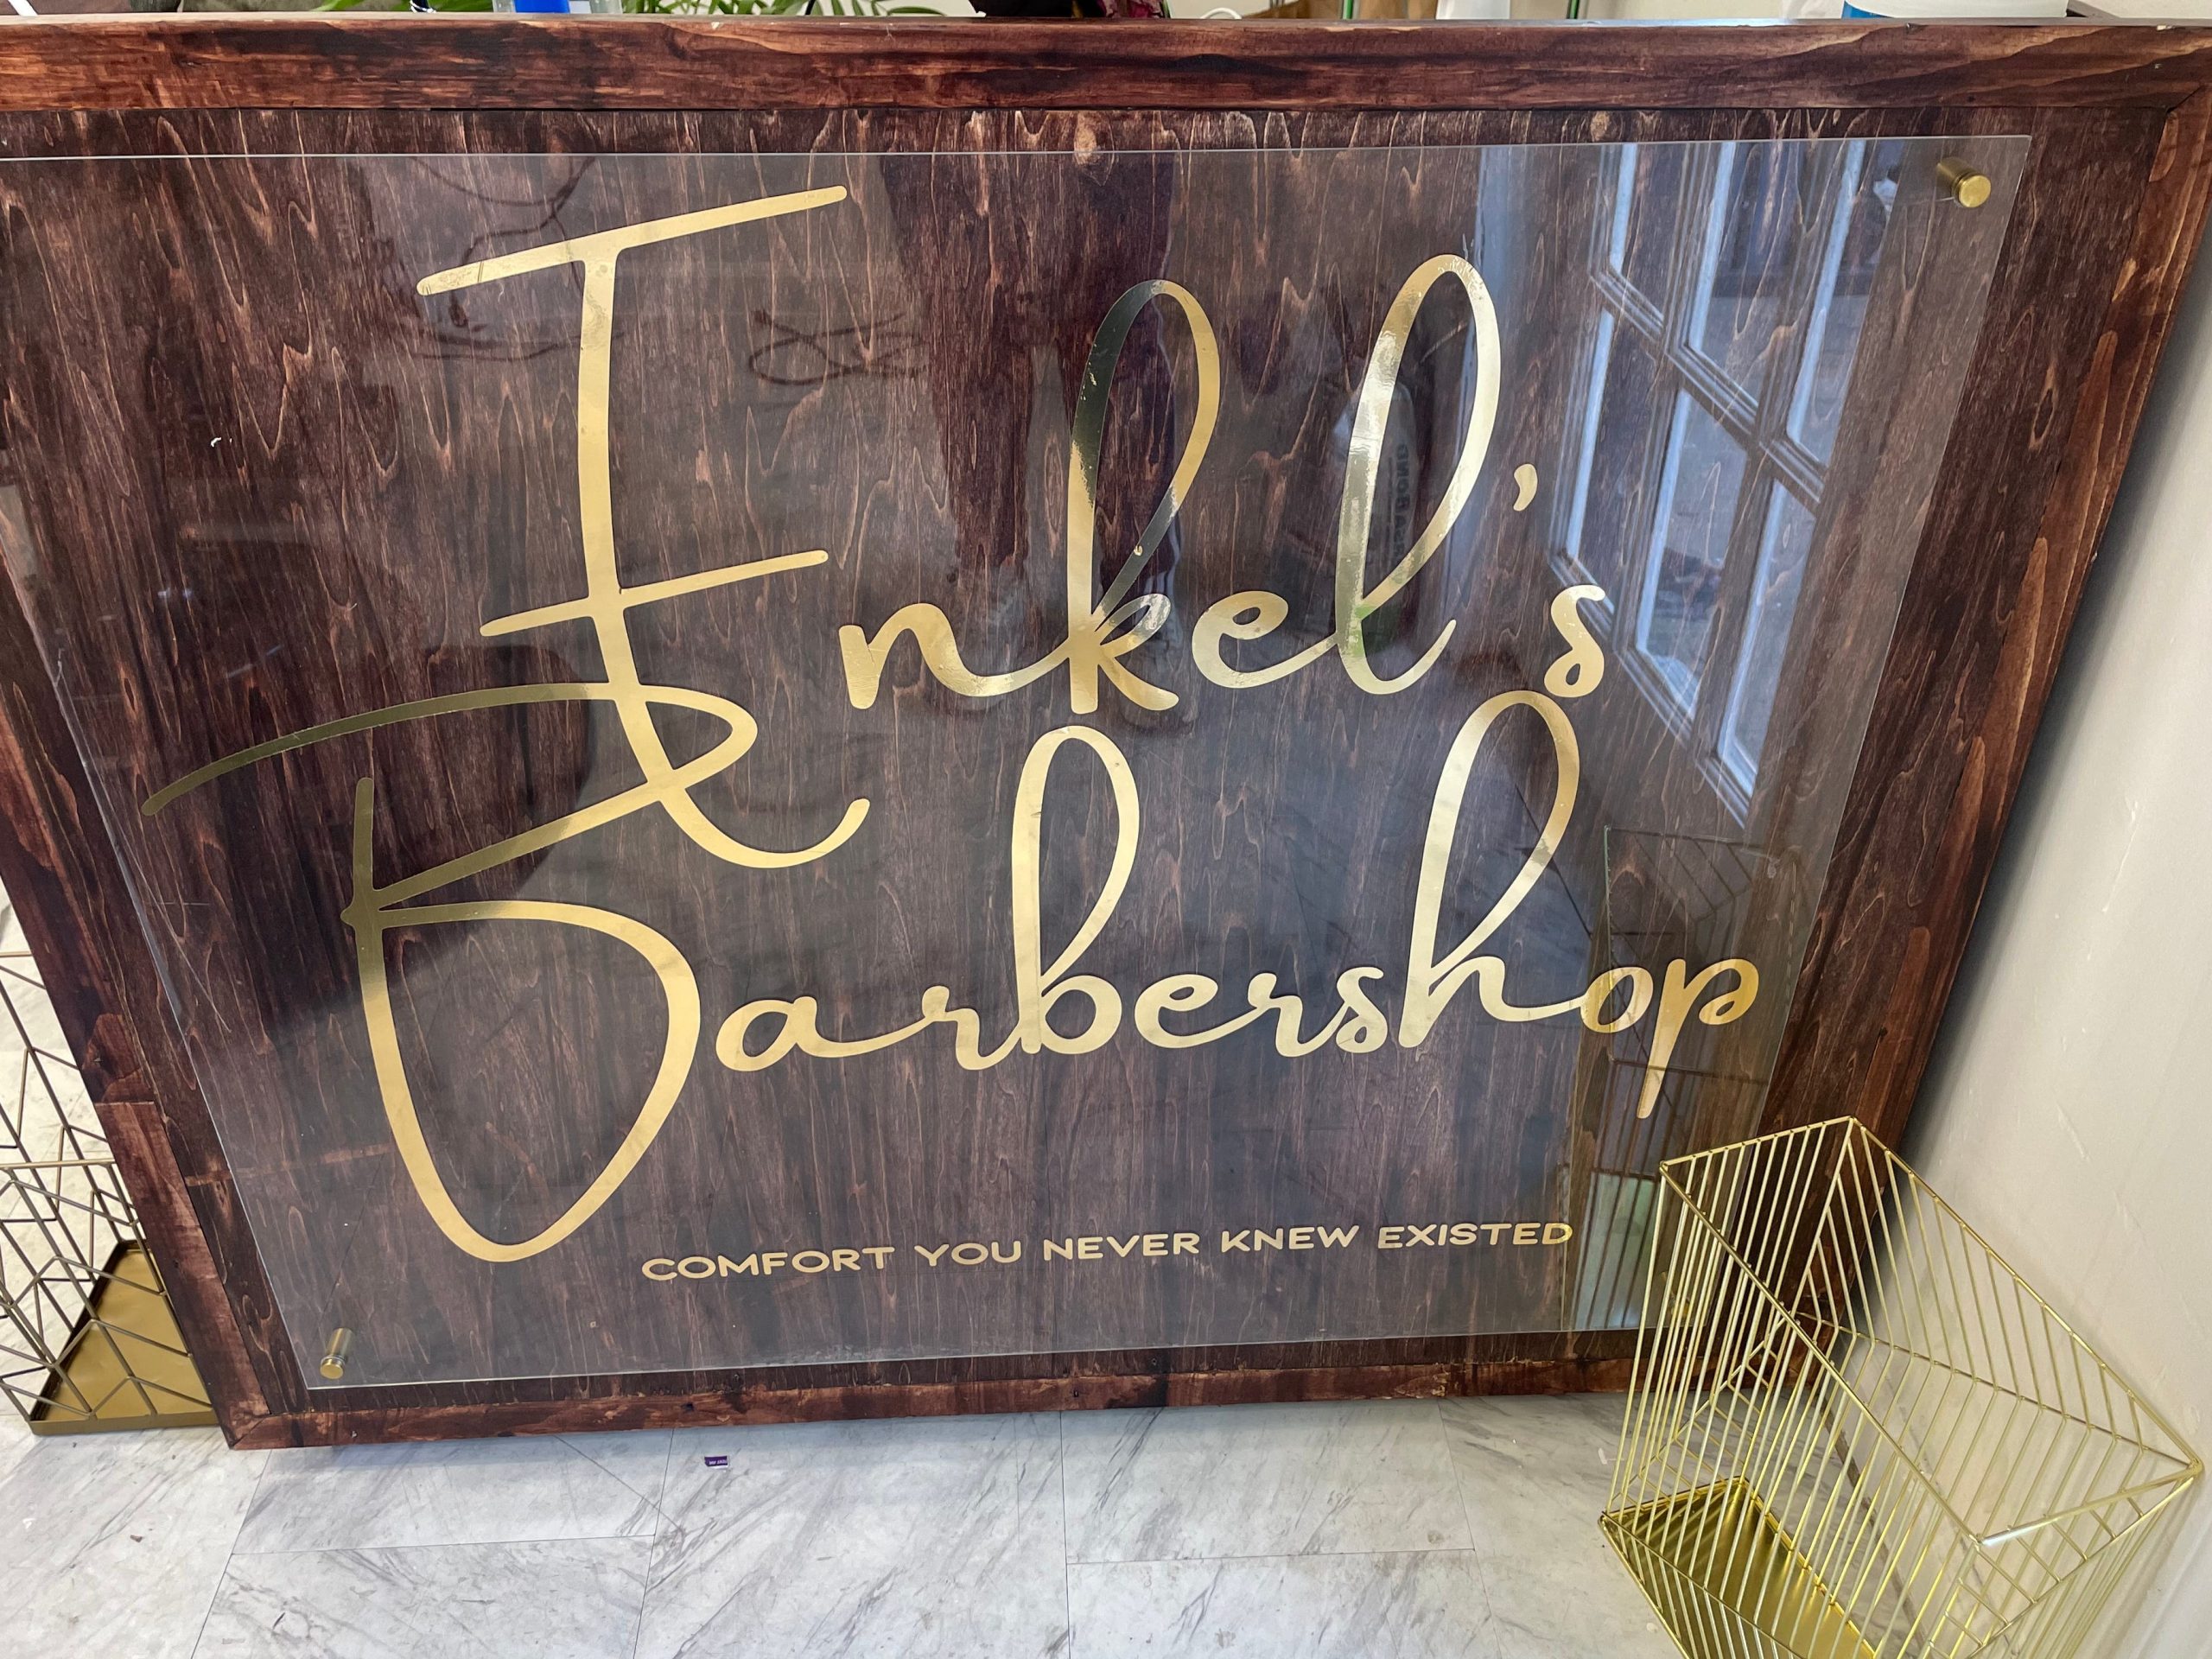 A counter at Enkel's Barbershop in Brooklyn displays the shop's logo.